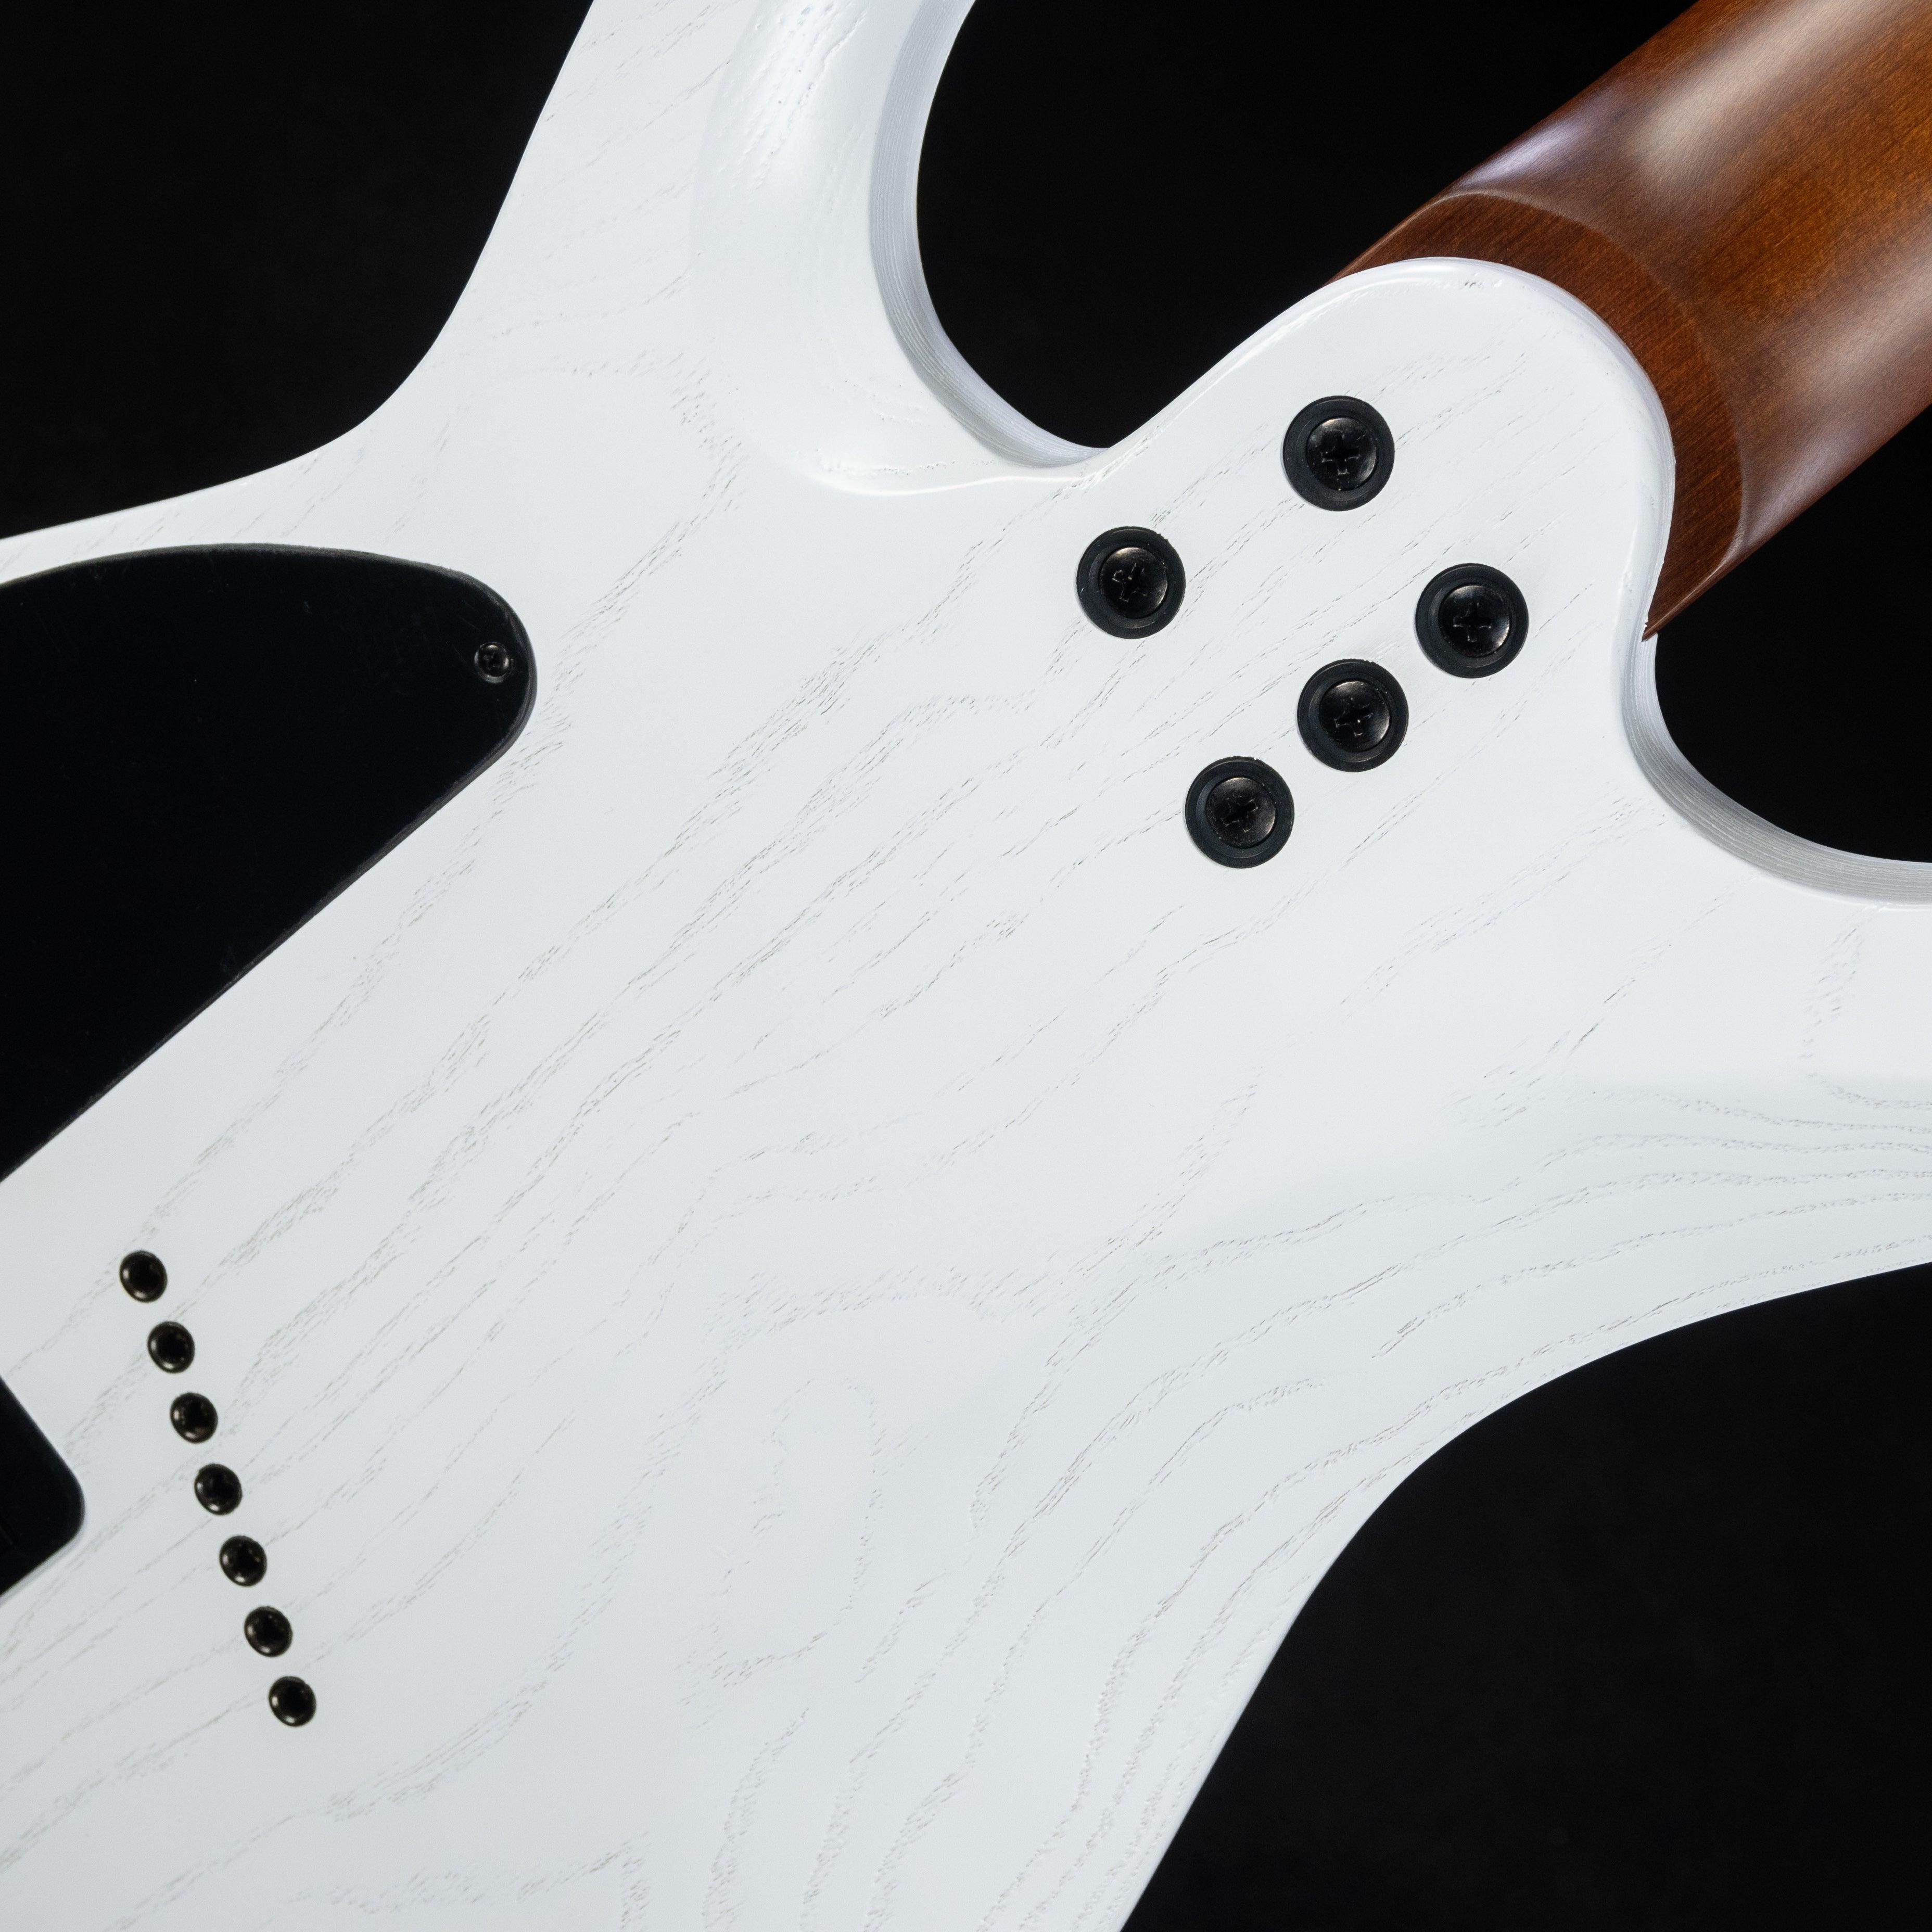 Legator Ninja N7FP 7-string Multiscale Electric Guitar (Snowfall) - Impulse Music Co.